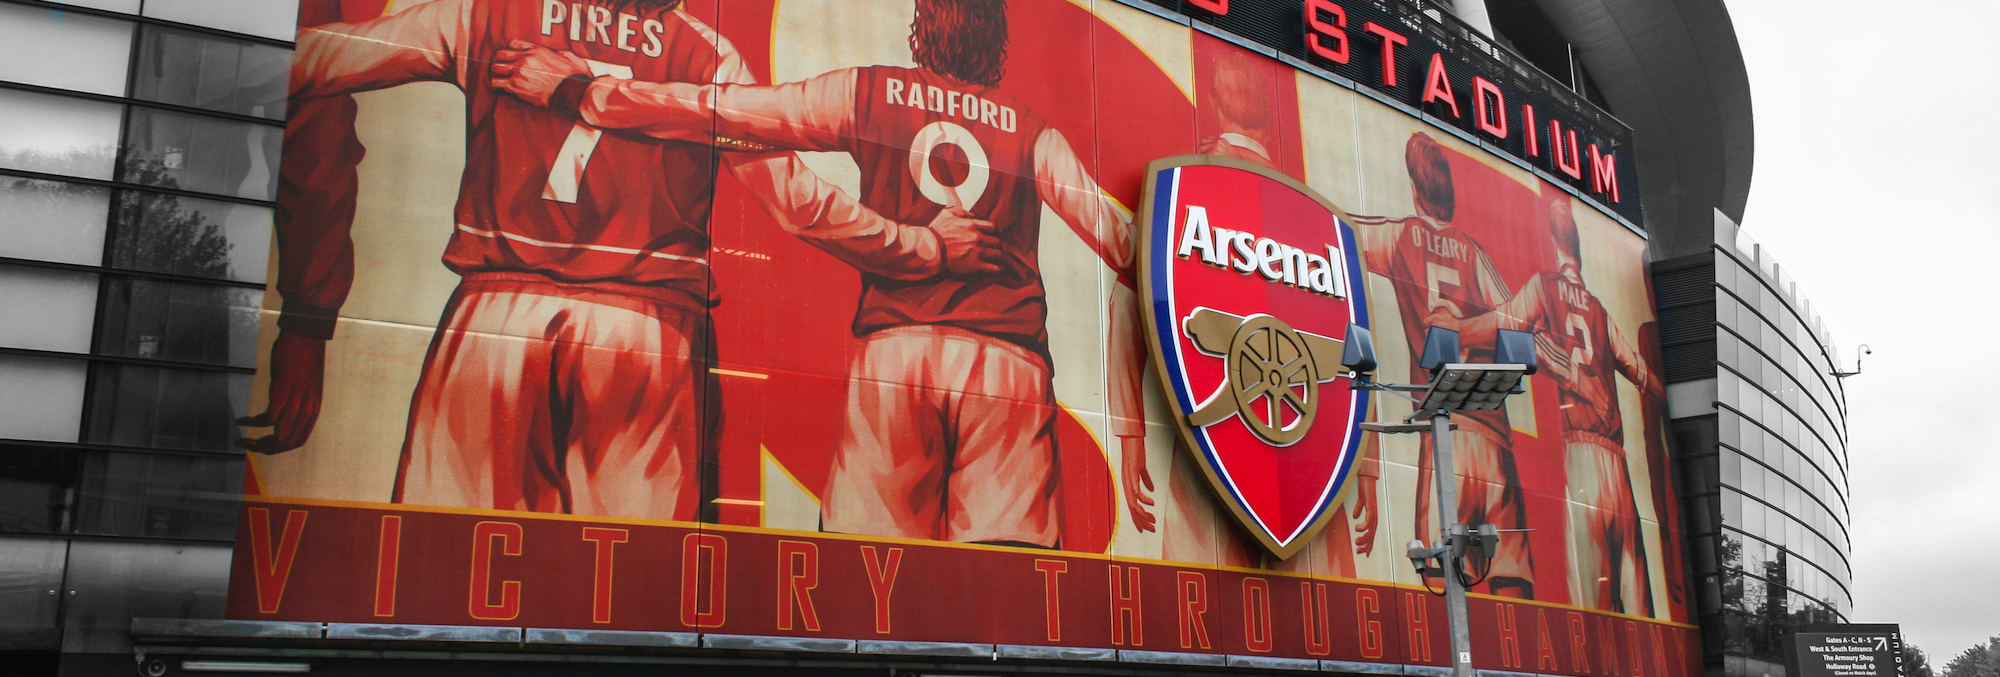 Arsenal FC image